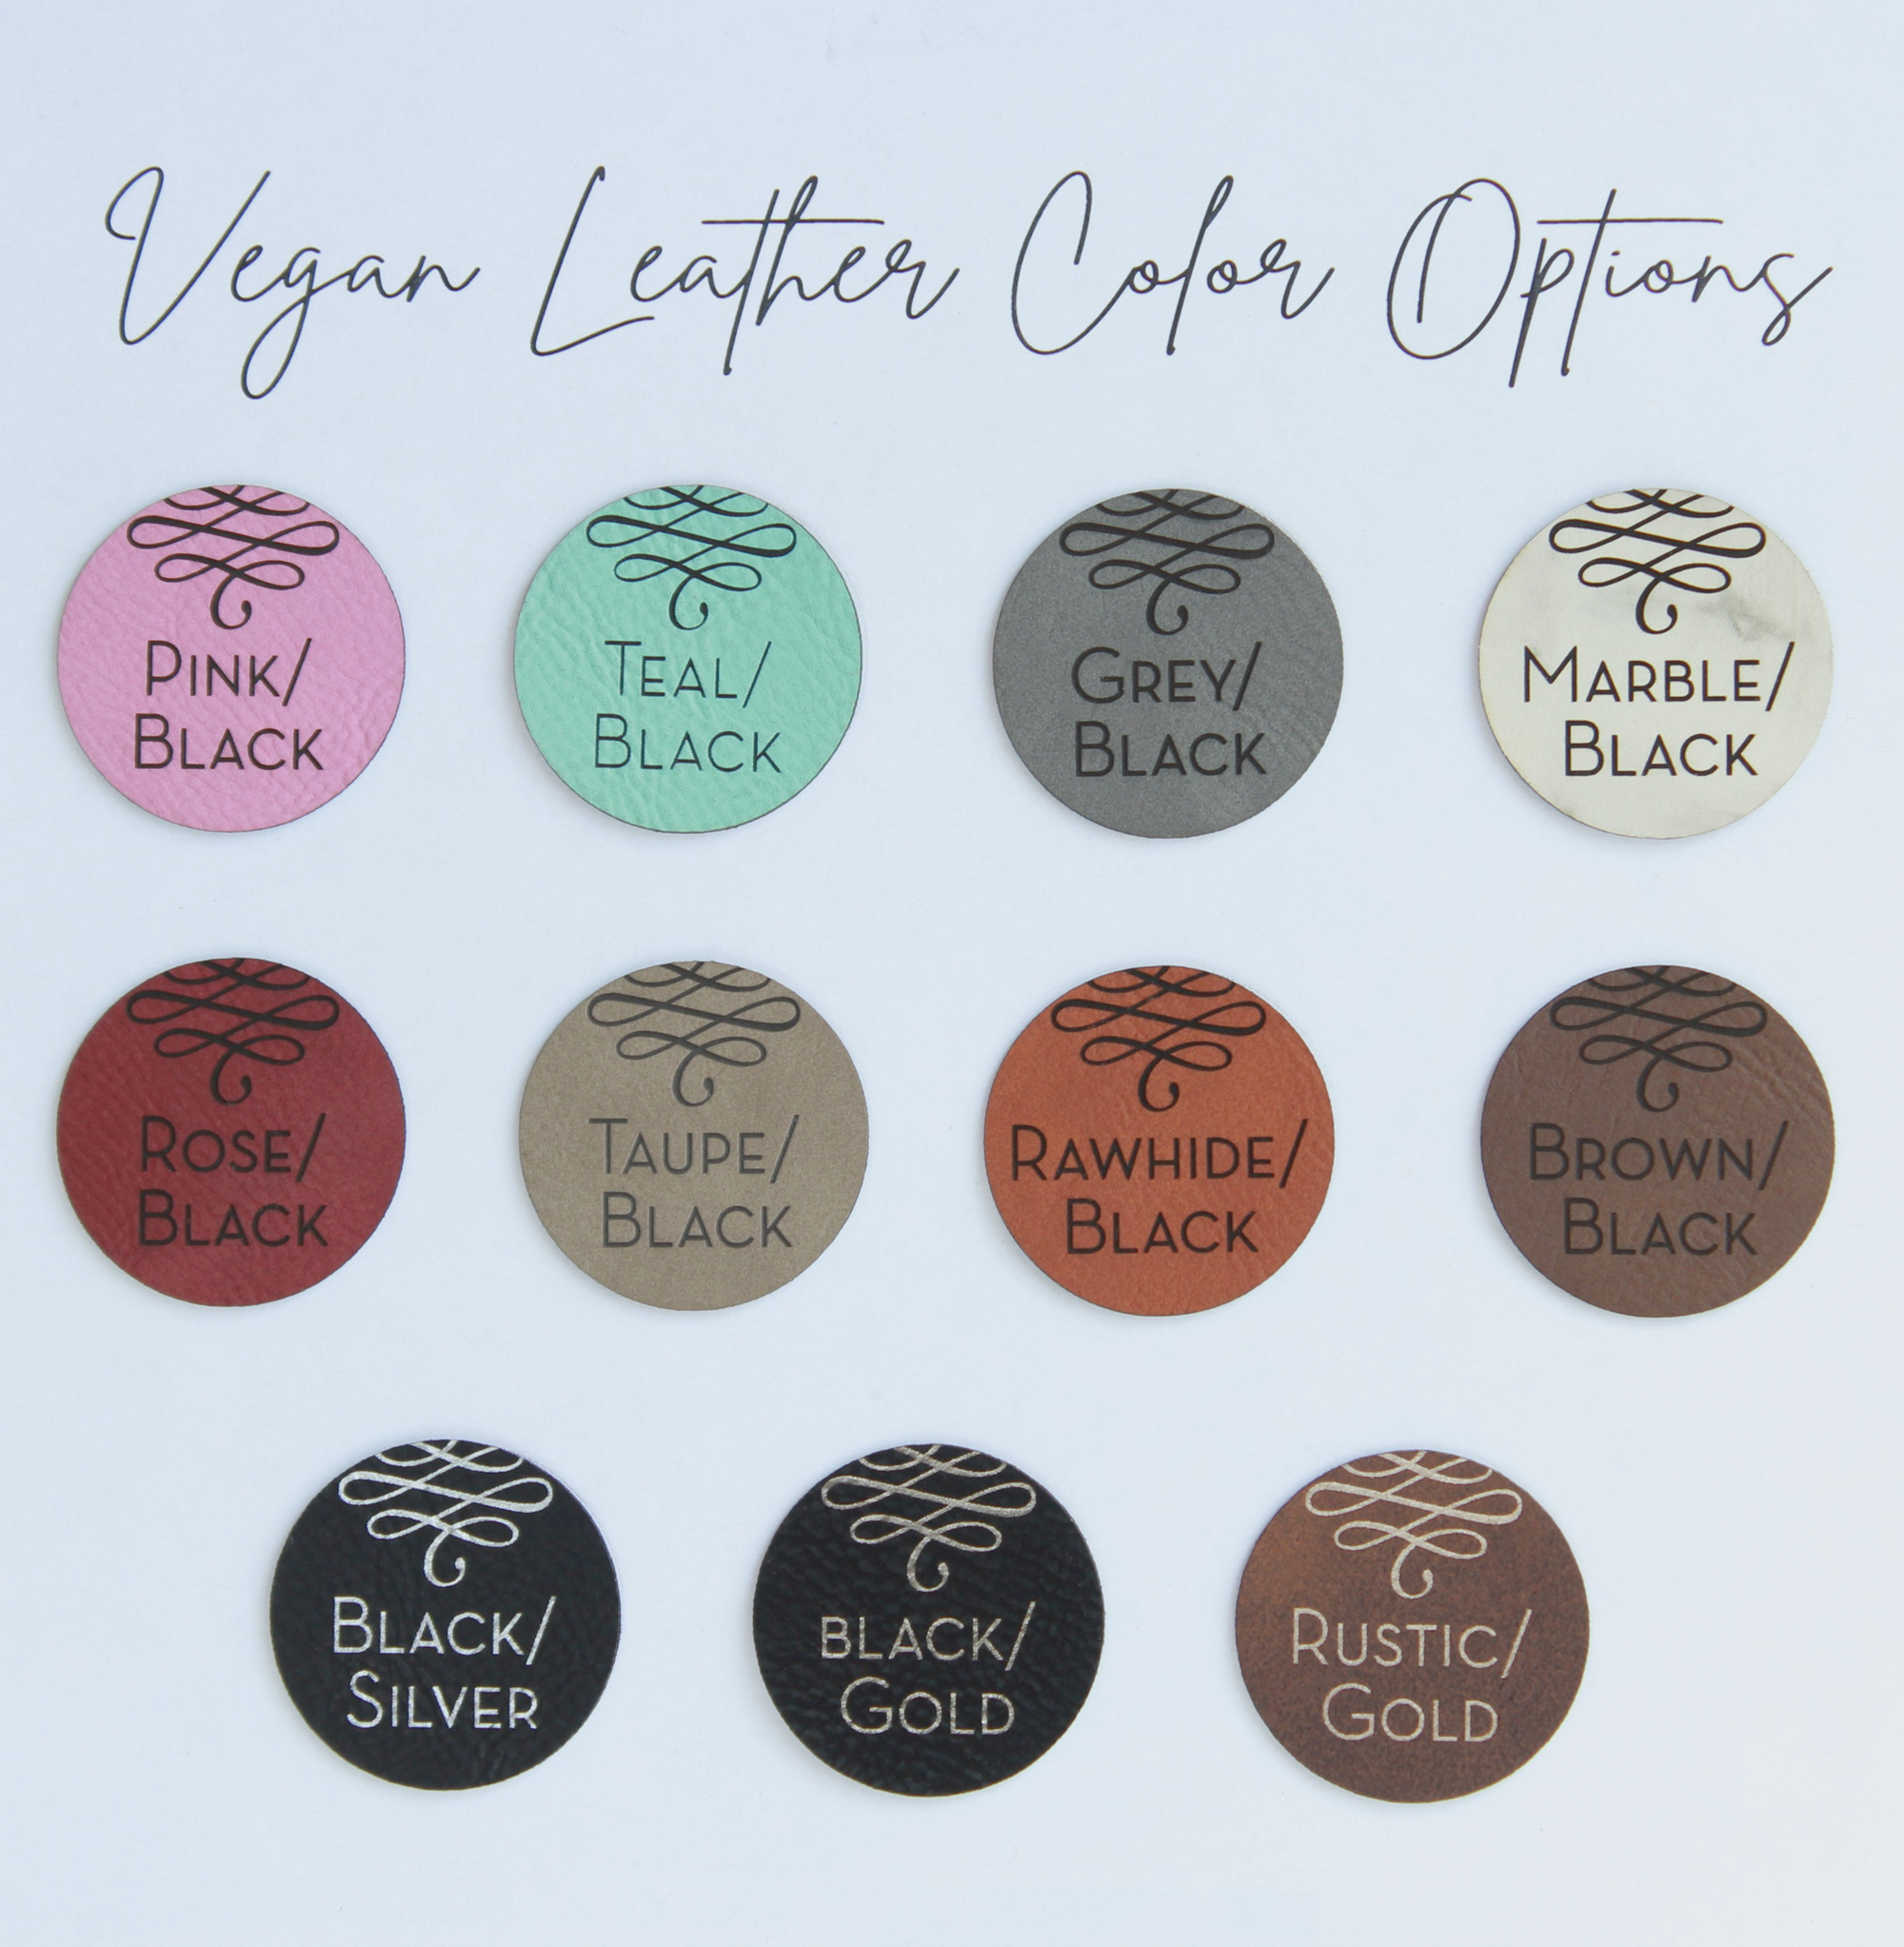 Personalized Vegan Leather Portfolio - Small